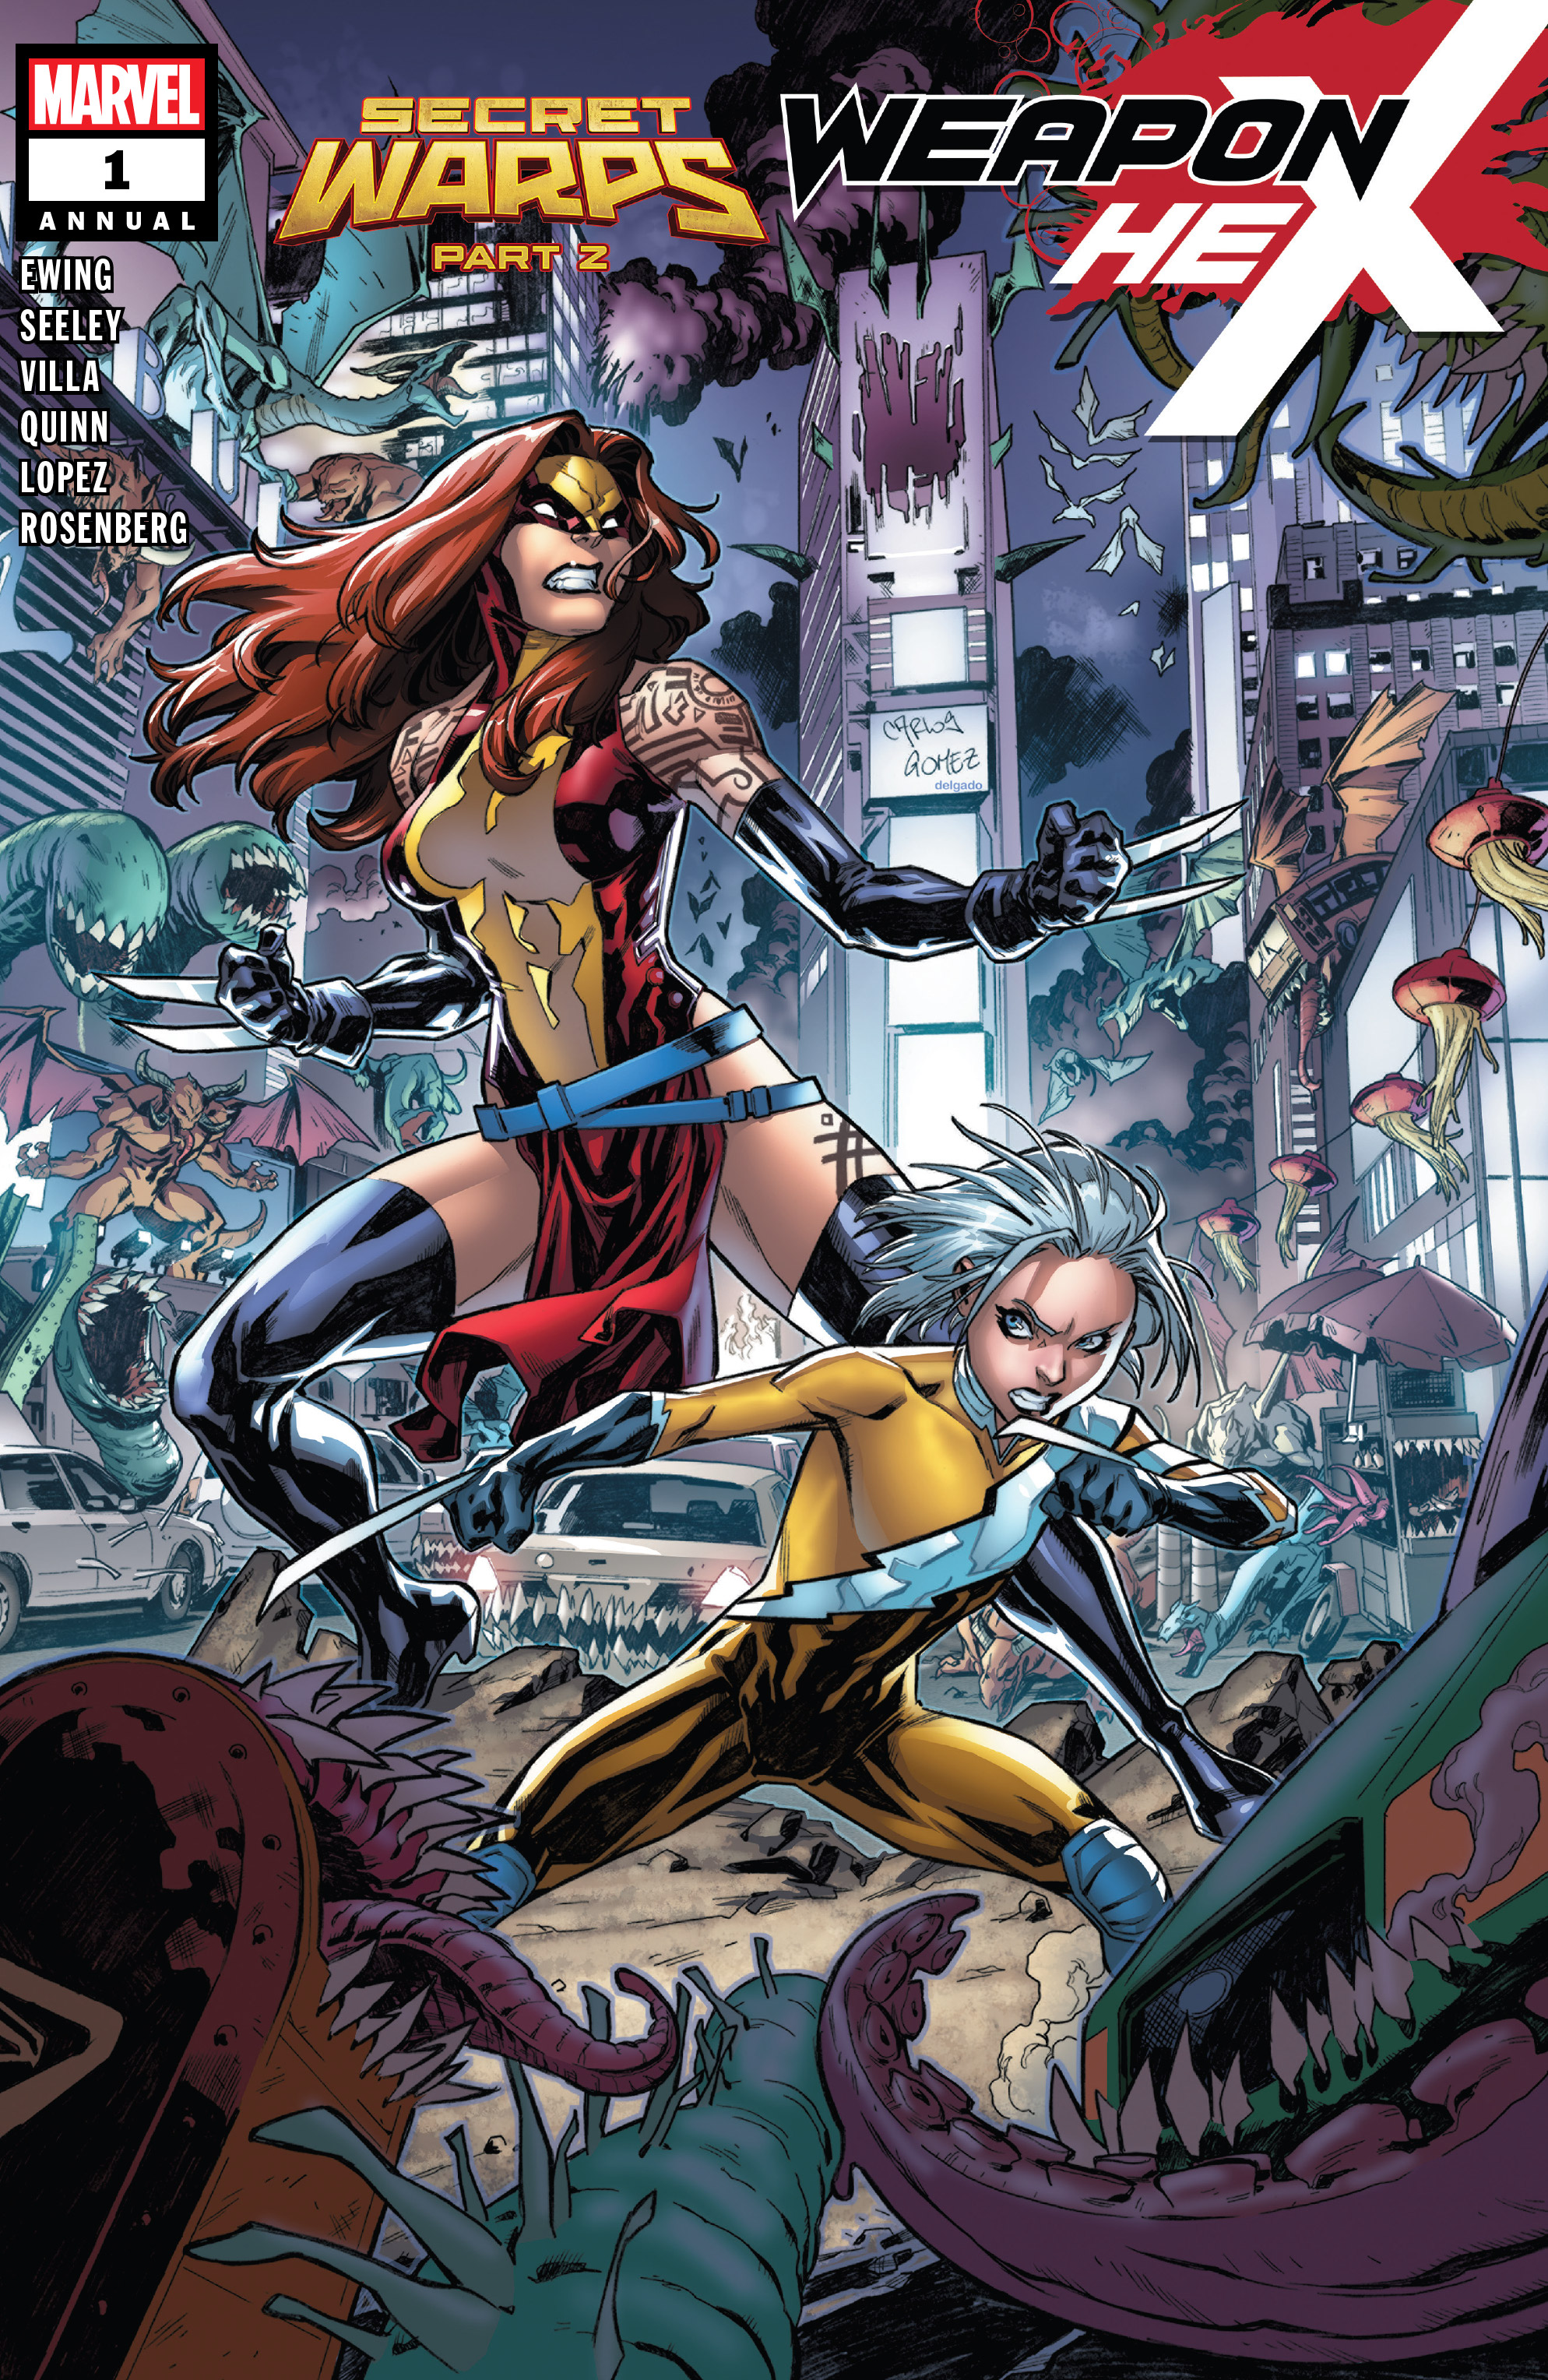 Read online Secret Warps: Weapon Hex Annual comic -  Issue # Full - 1